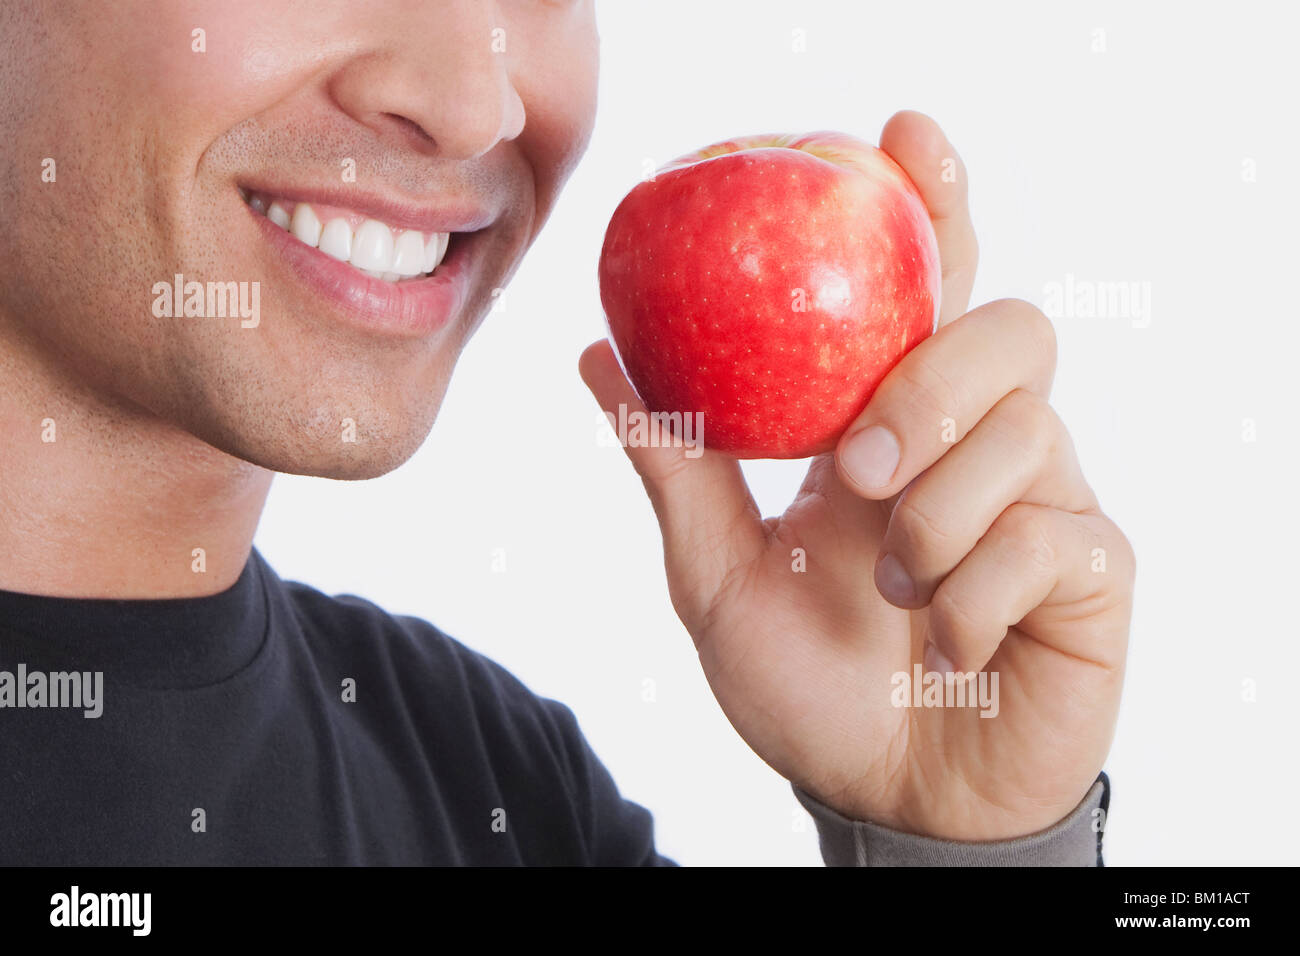 Man holding an apple Stock Photo